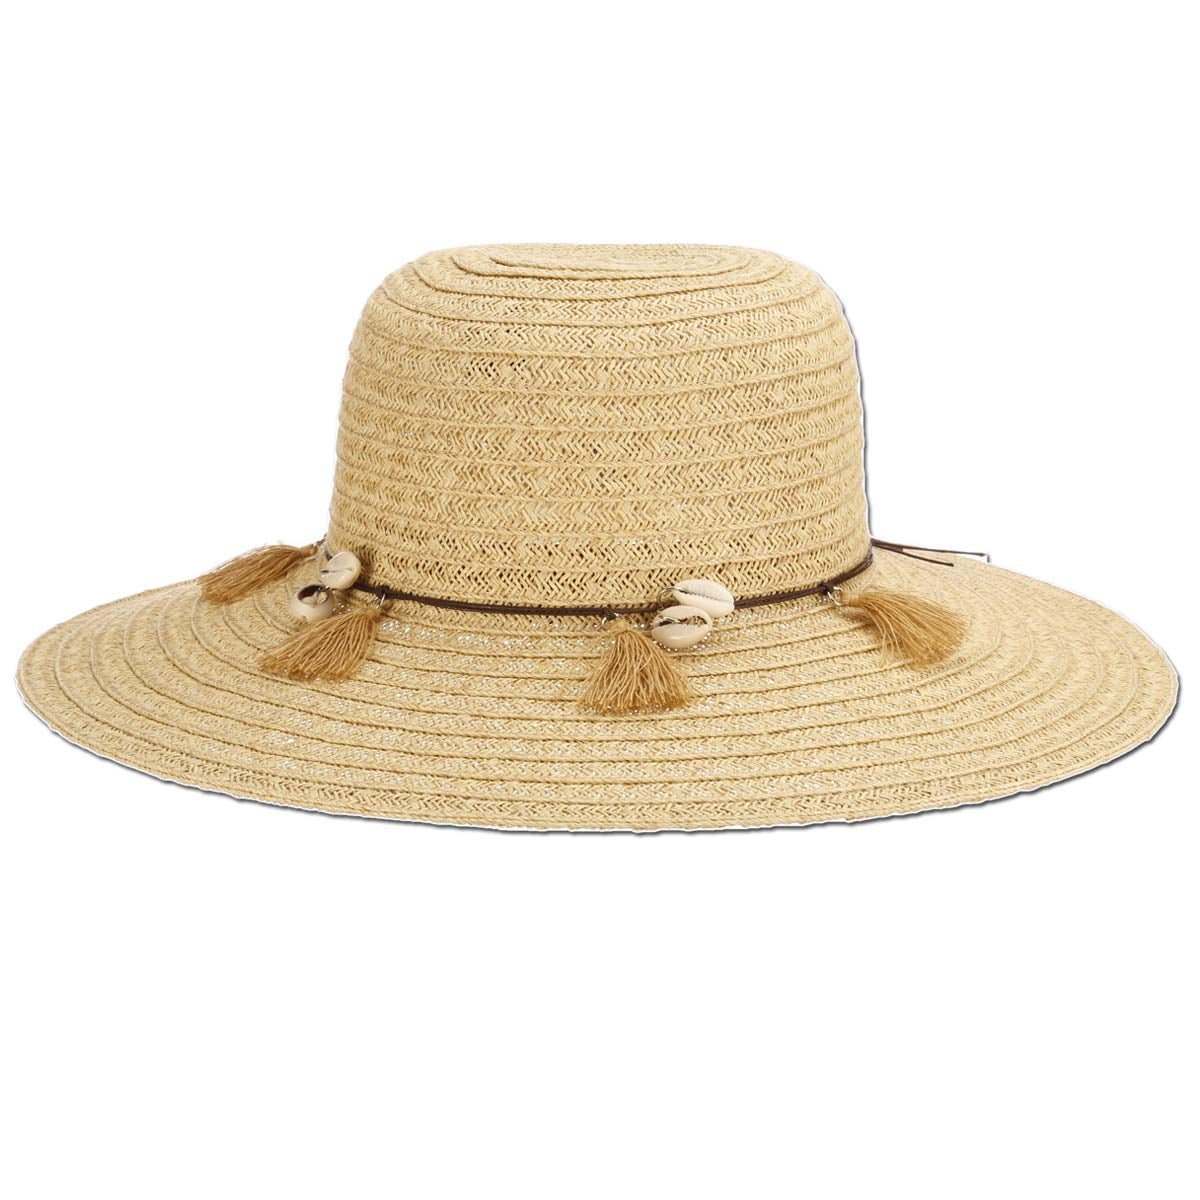 Panama Jack Women's Sun Hat - Lightweight Paper Braid, Packable, 4 1/4"  Floppy Big Brim with Shells and Tassels (Sand) - Walmart.com